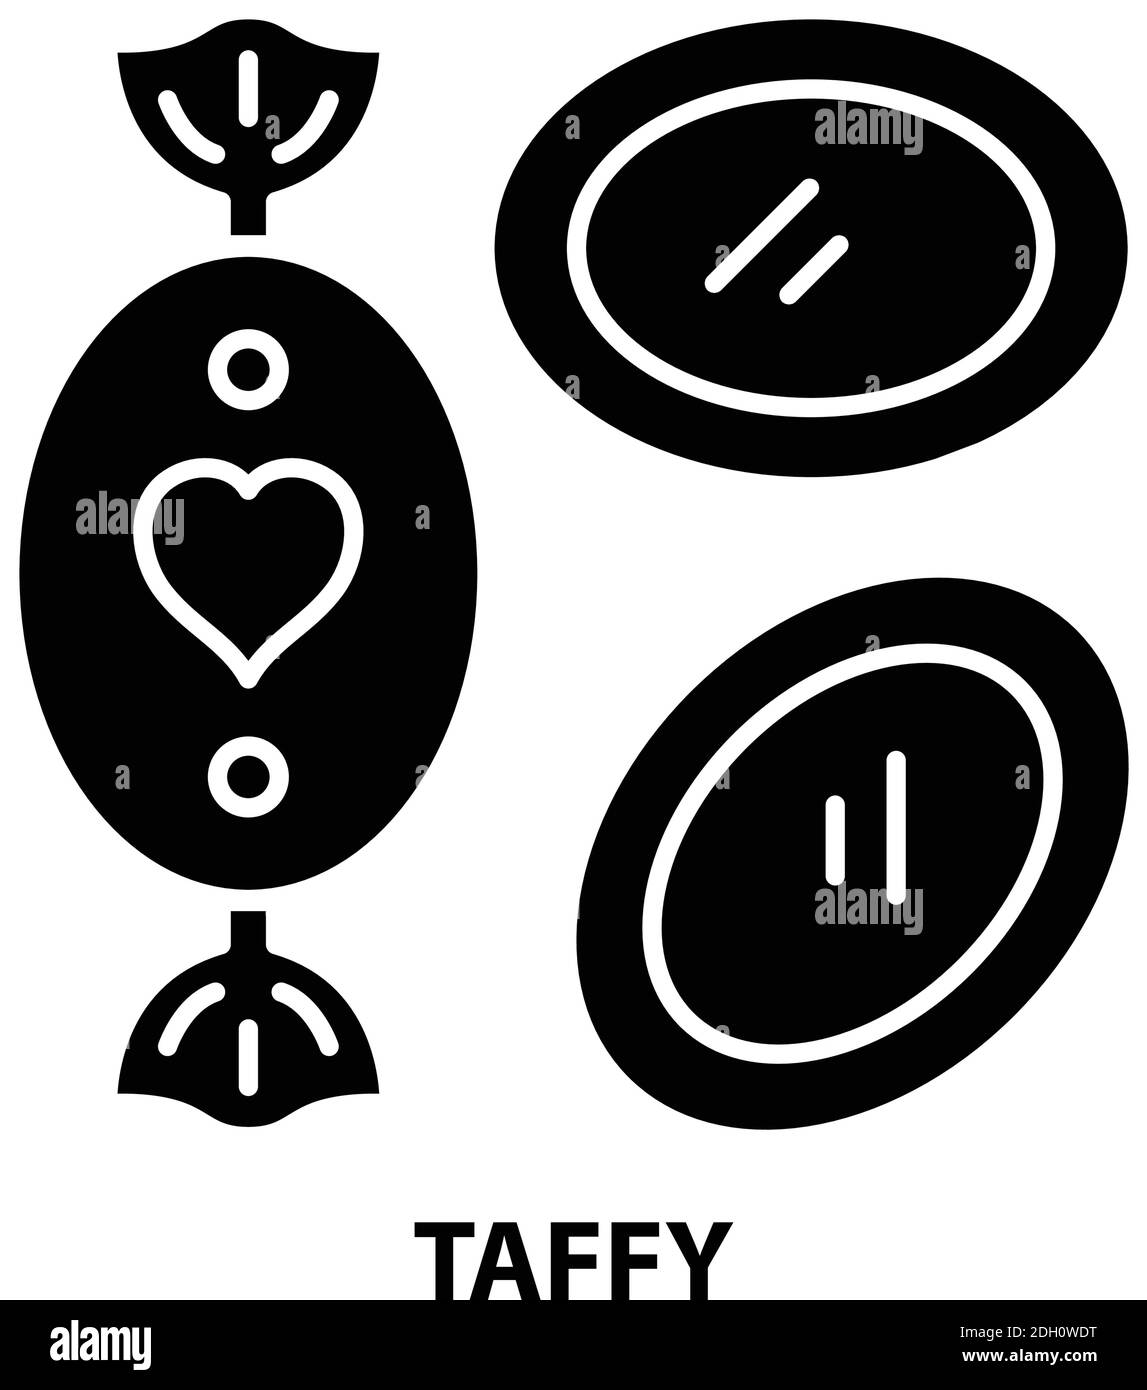 taffy icon, black vector sign with editable strokes, concept illustration Stock Vector